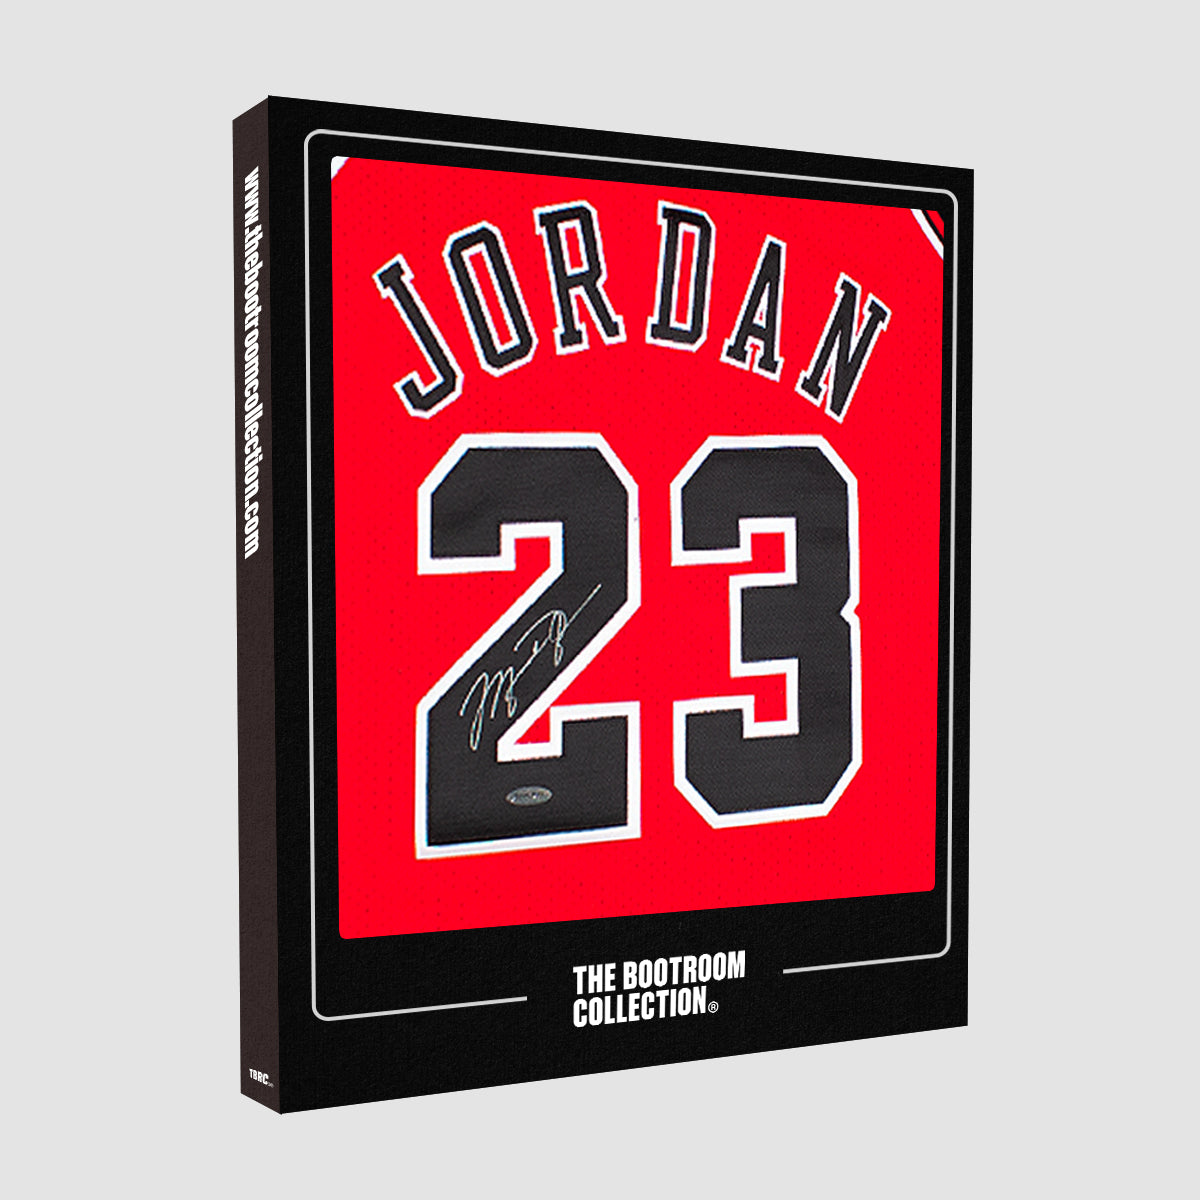 Michael Jordan Signed Chicago Bulls 1997-98 Away Jersey - Boxed